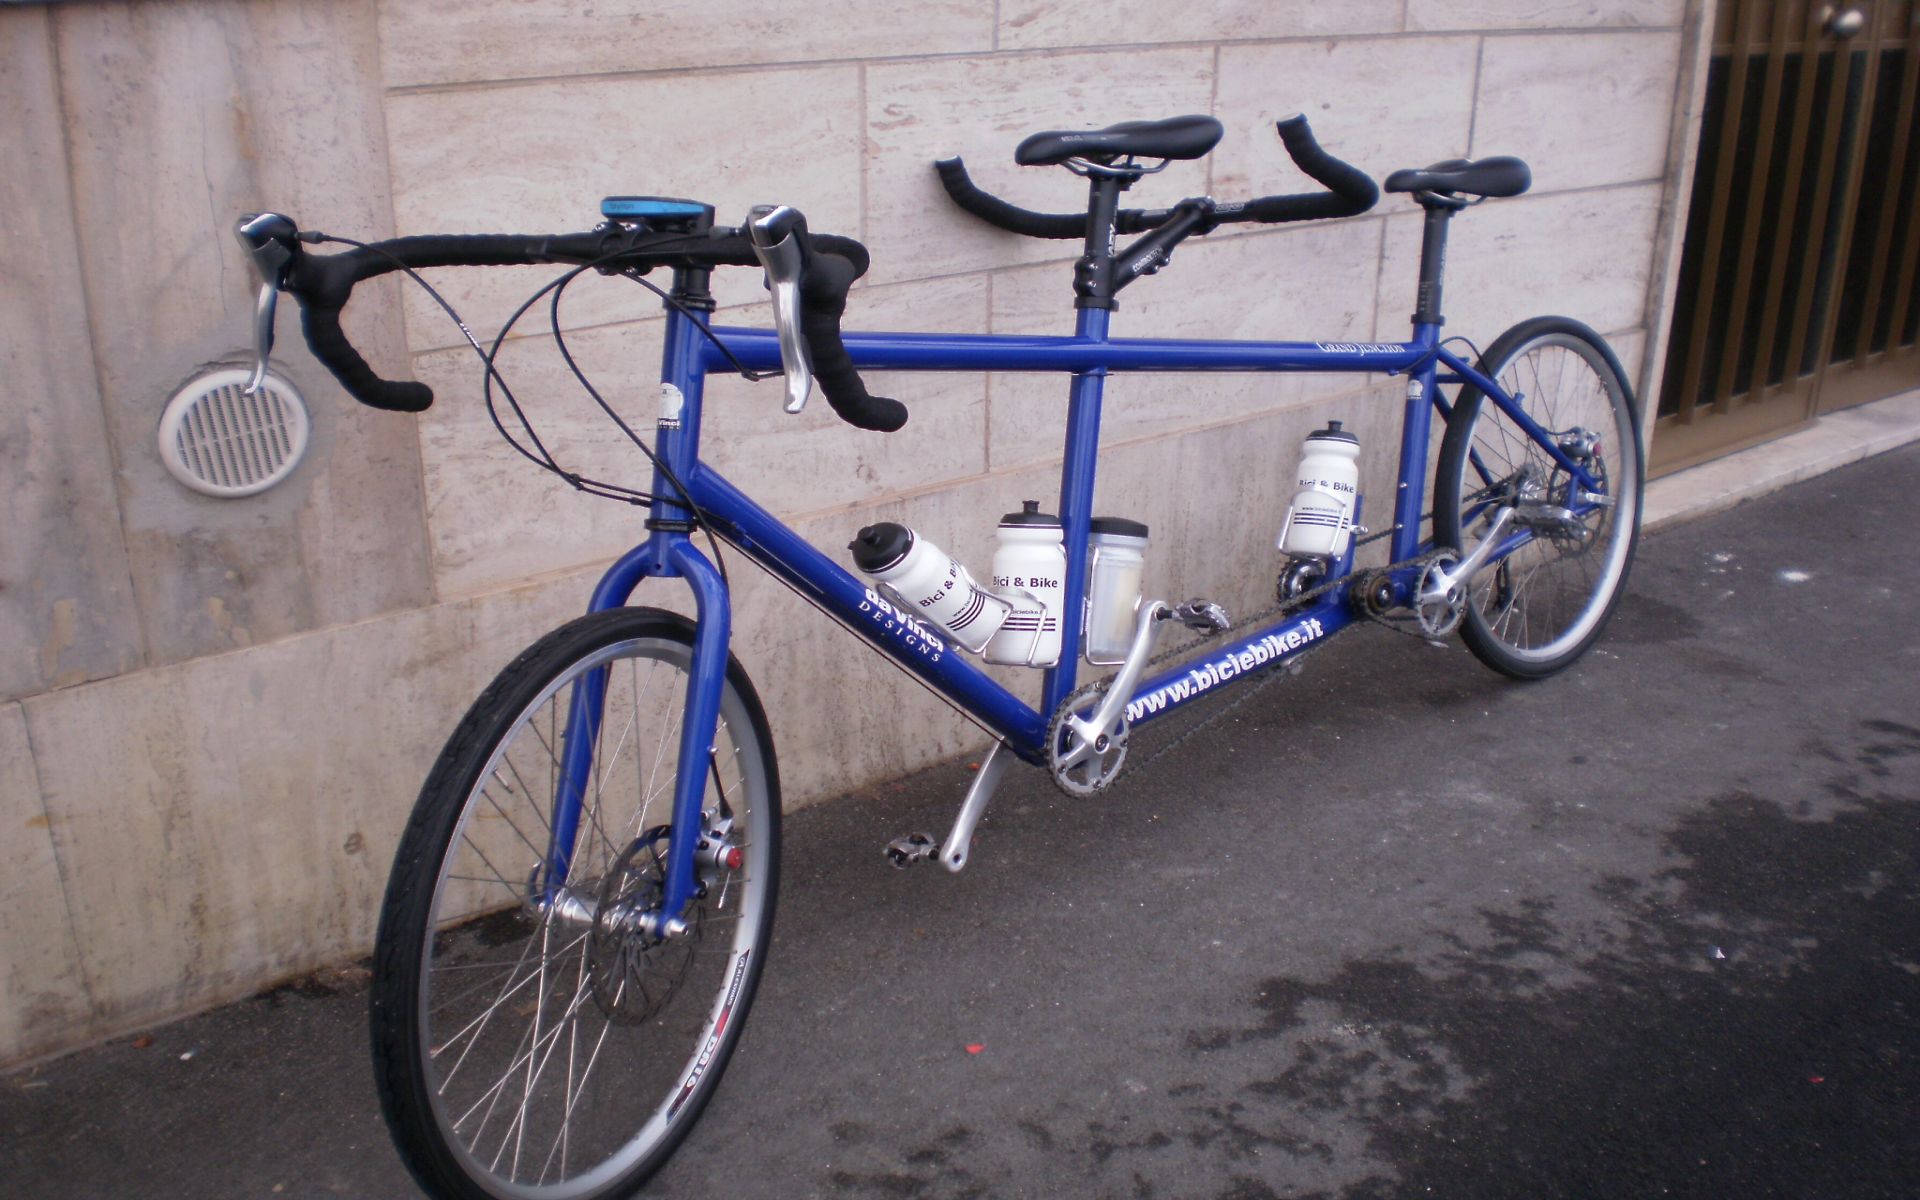 Bici & Bike Pistoia